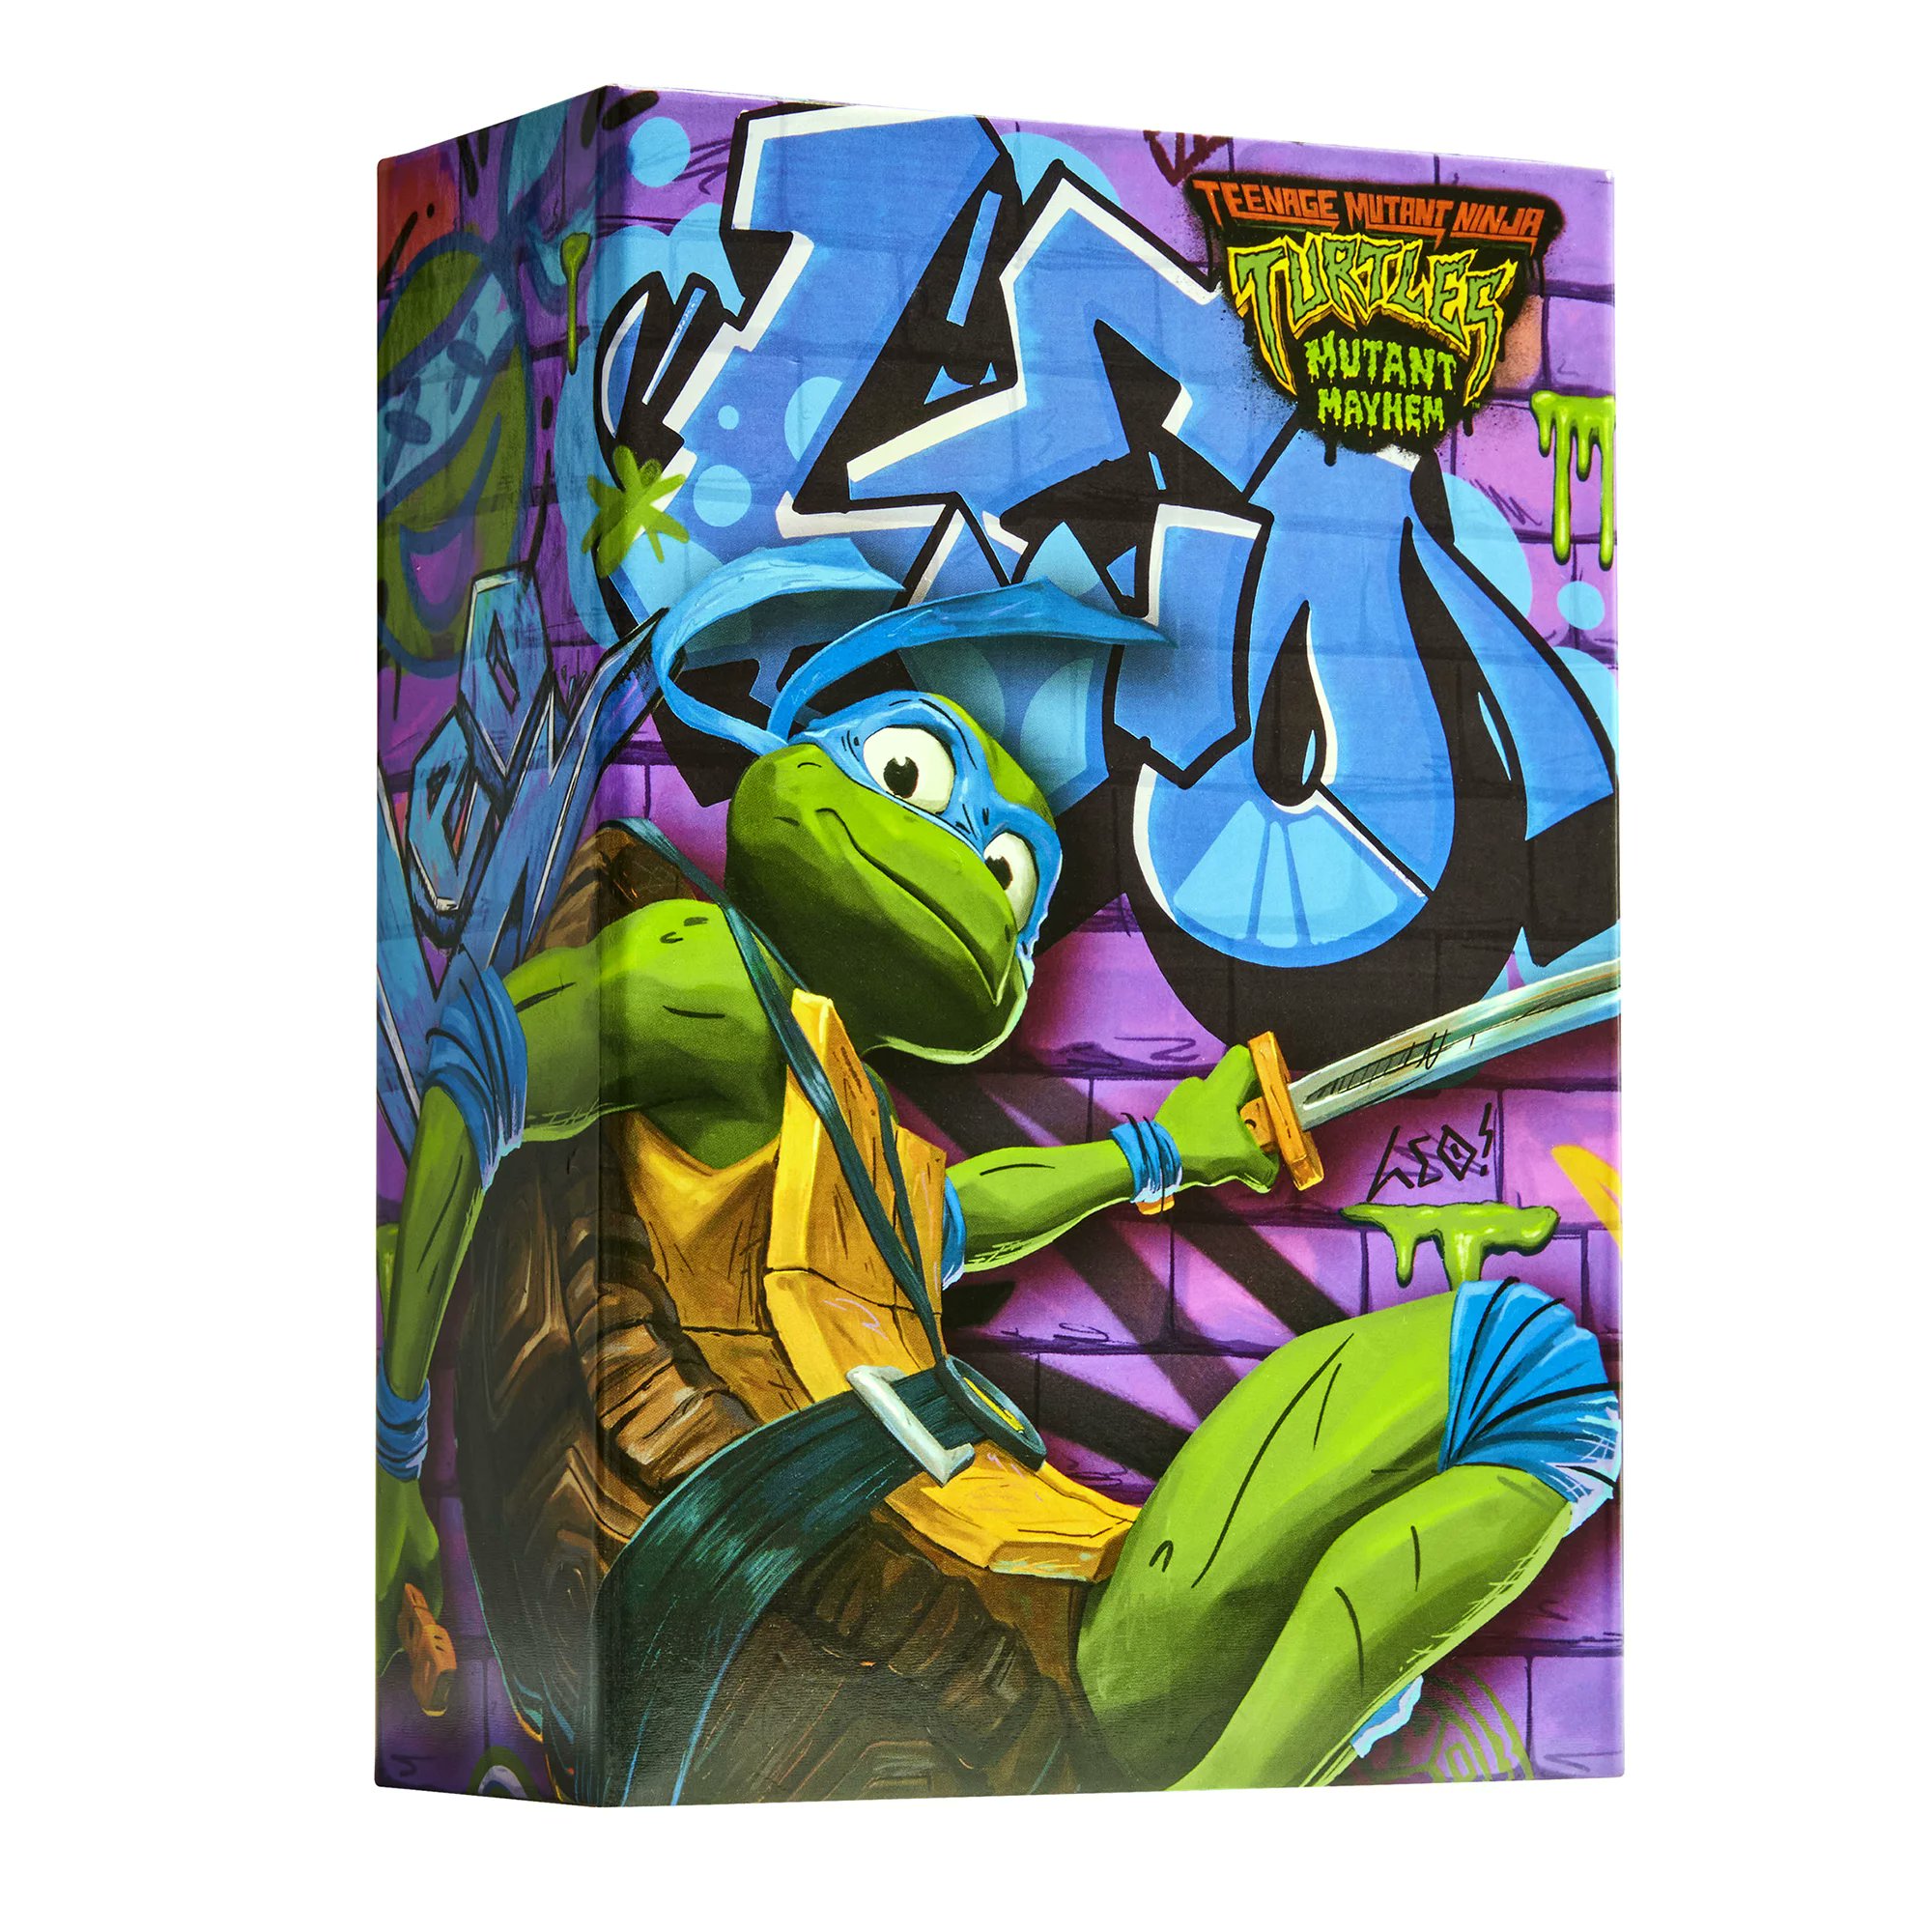 Teenage Mutant Ninja Turtles Mutant Mayhem 4.5” Donatello Collector Con  Action Figure by Playmates Toys